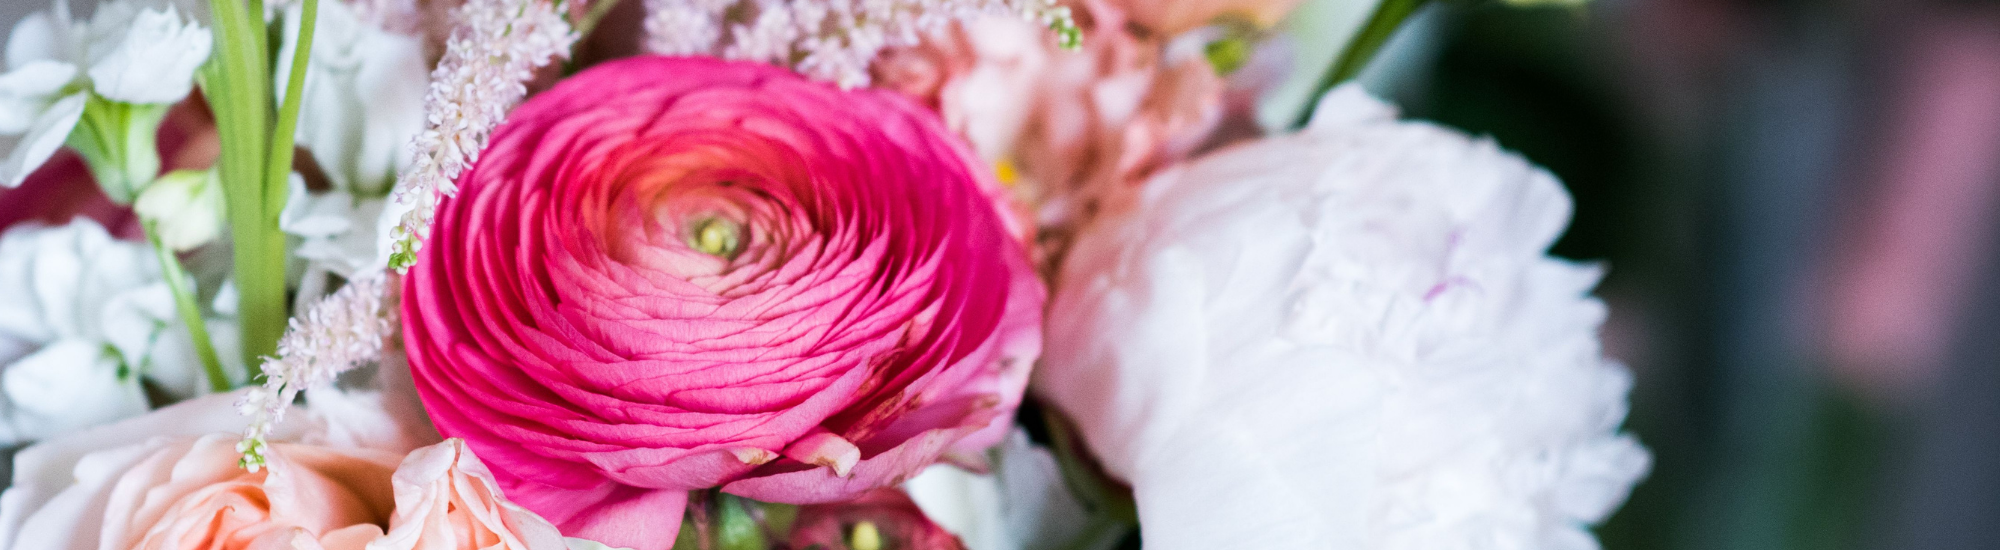 up-close view of wedding floral arrangement